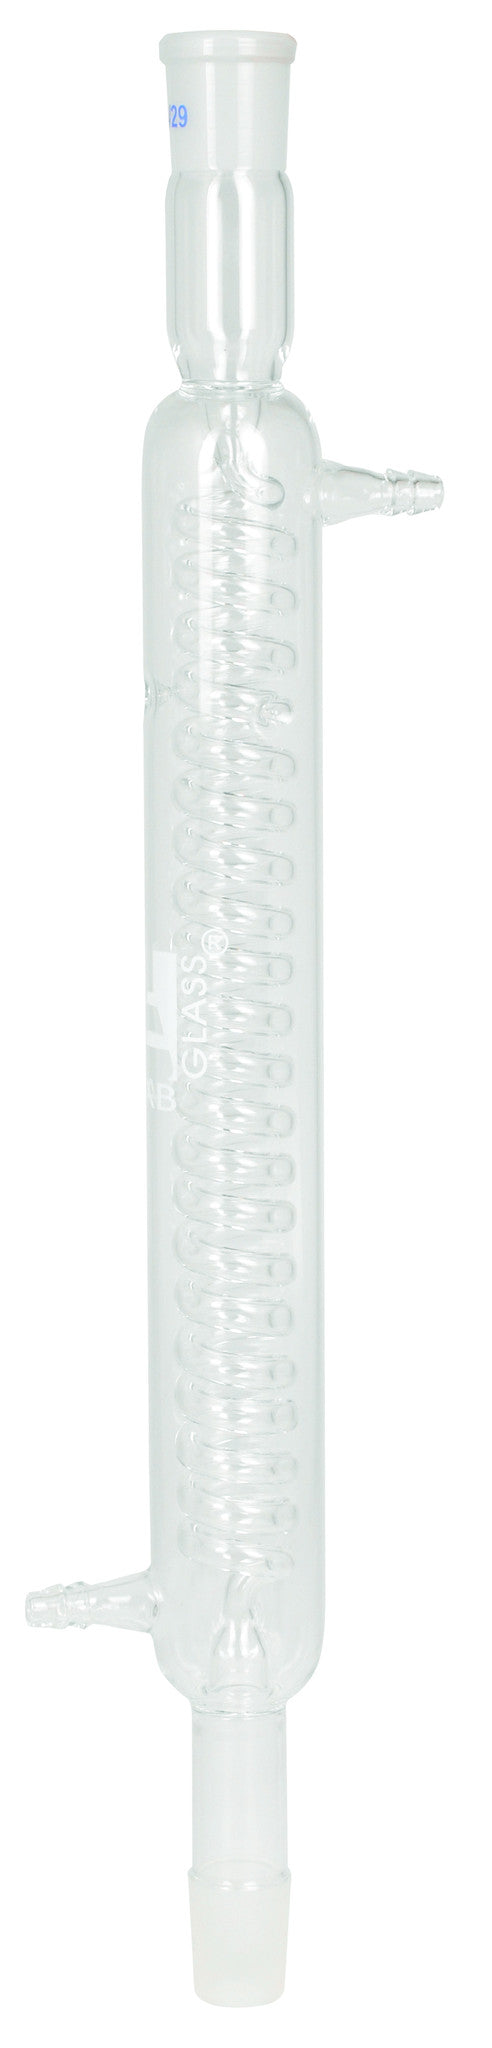 Condenser - Graham, Socket size 14/23 & Cone size 14/23, Effective length 16cm.